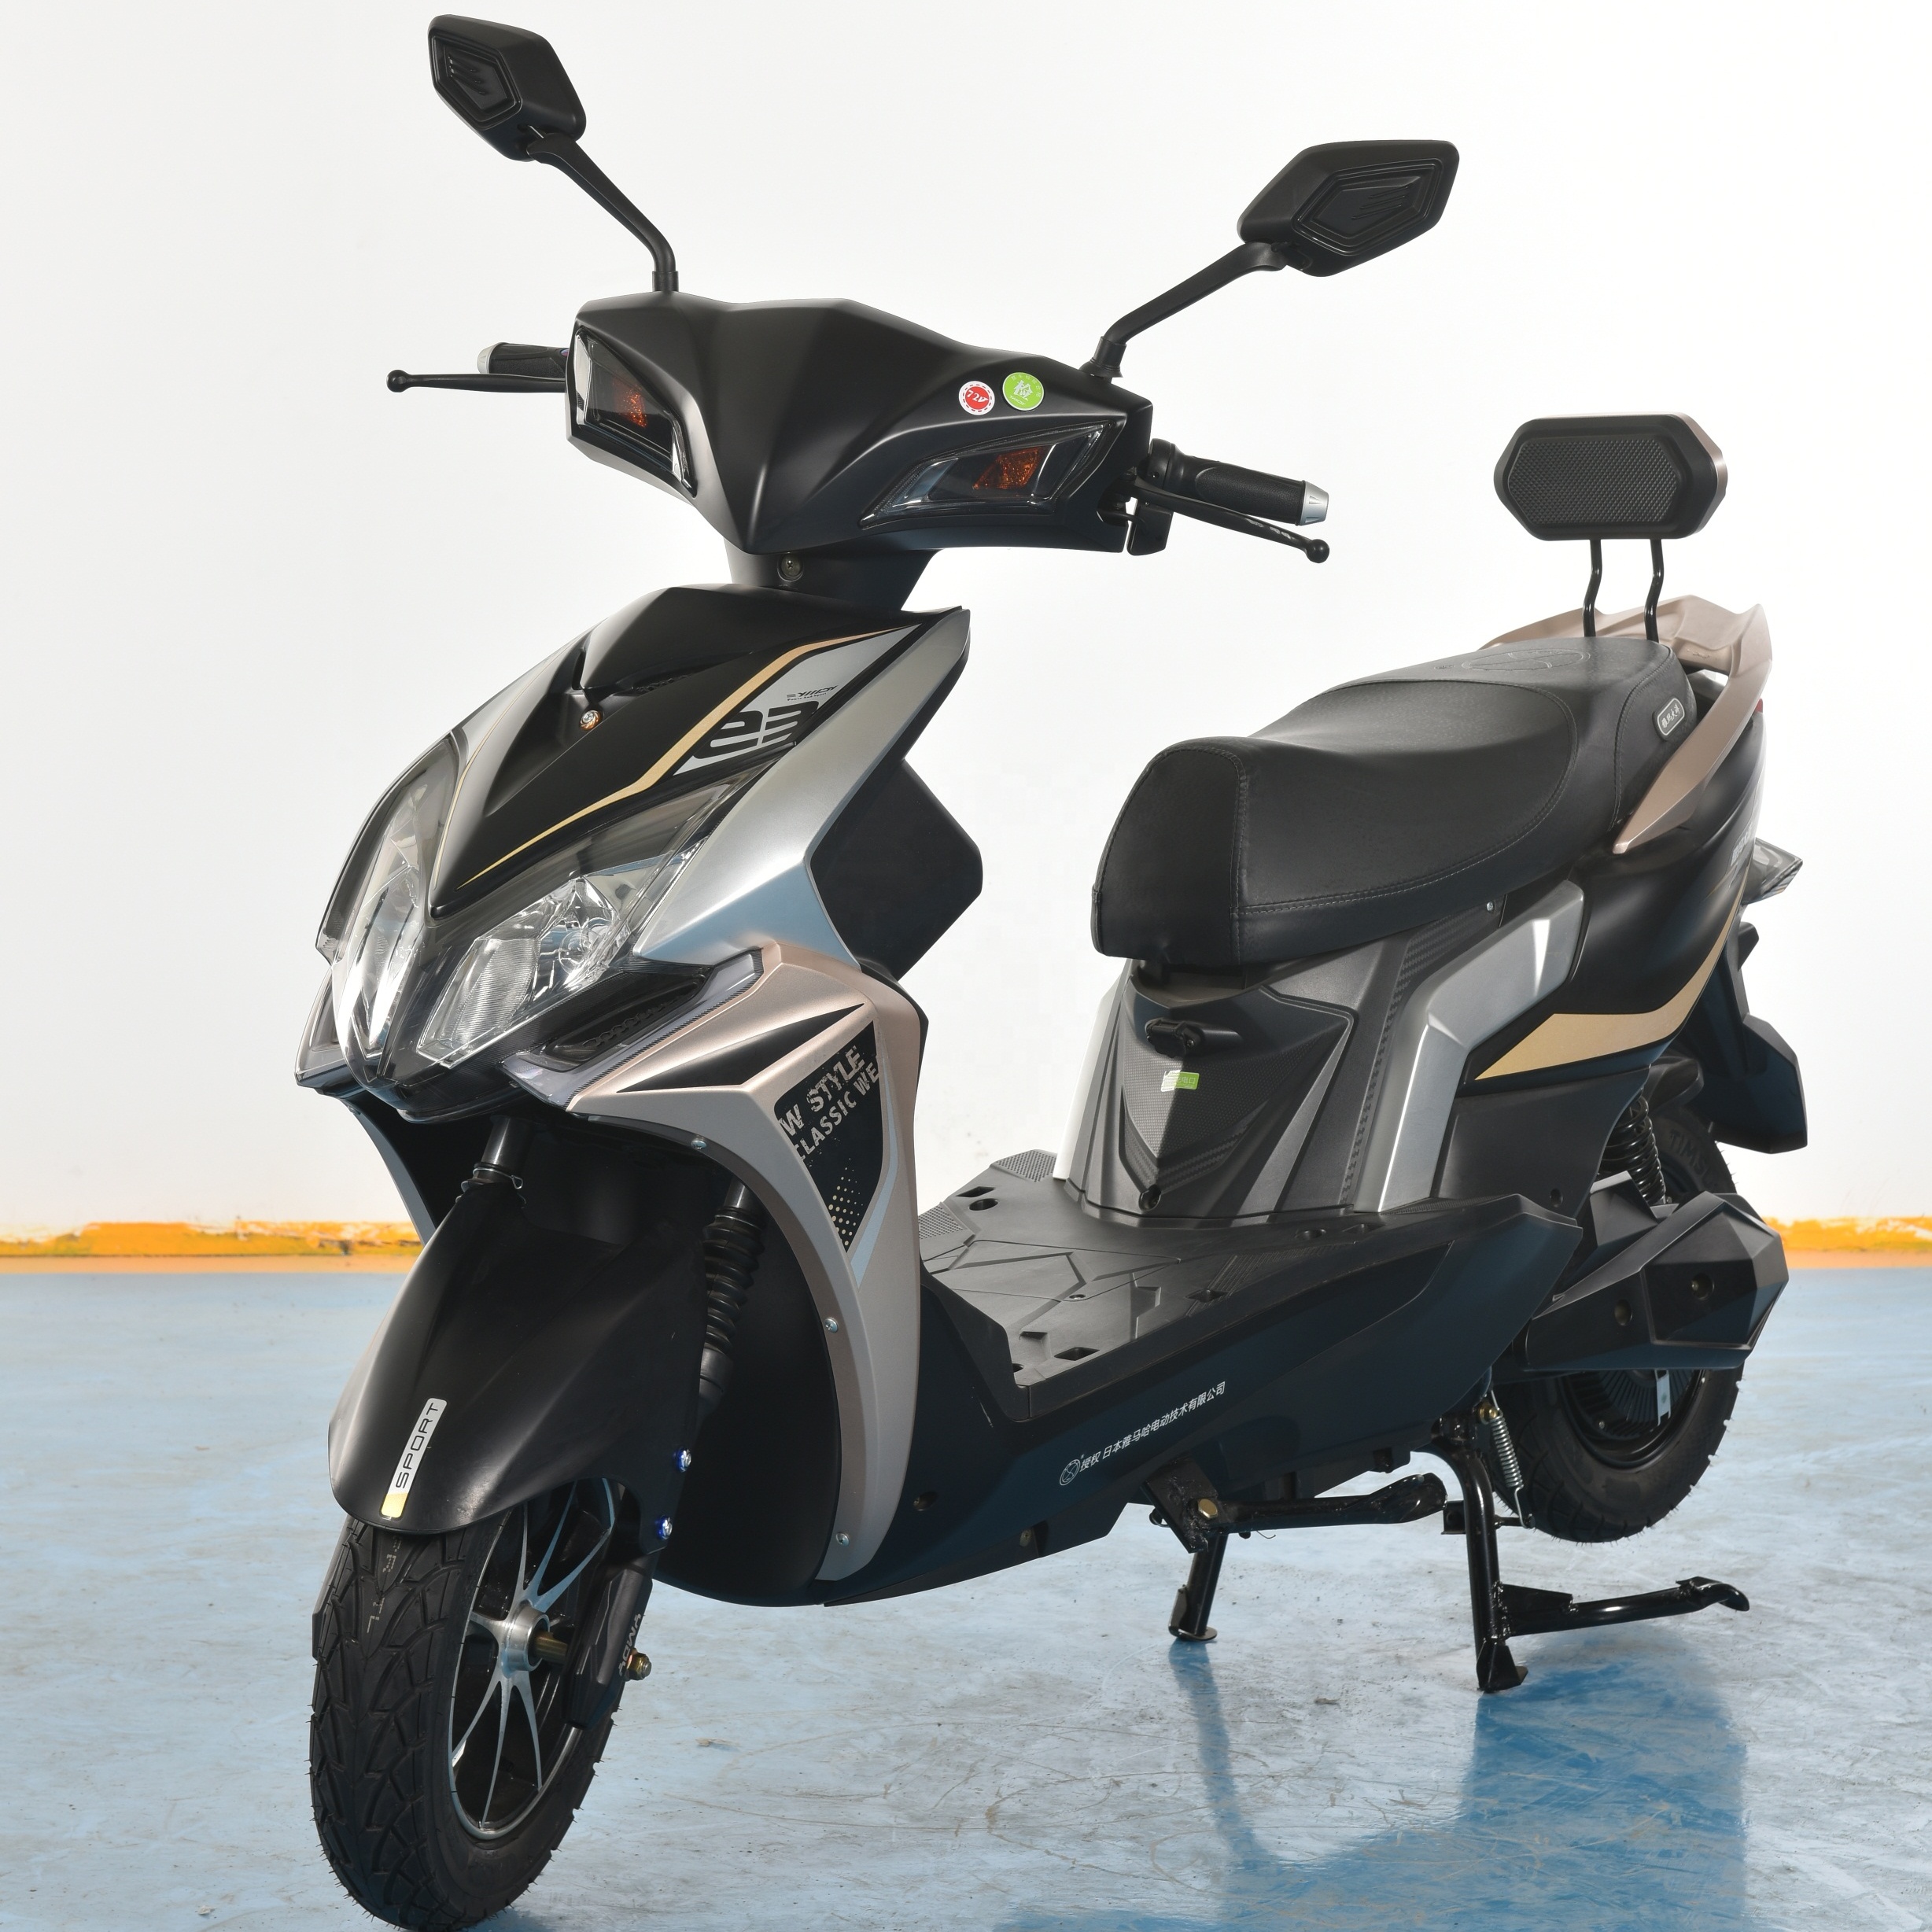 China Wholesale Cheap Electric Tricycle Factories - Qiangsheng Bajaj india pulsar bike mini electric scooters motorcycle vehicle company – Qiangsheng